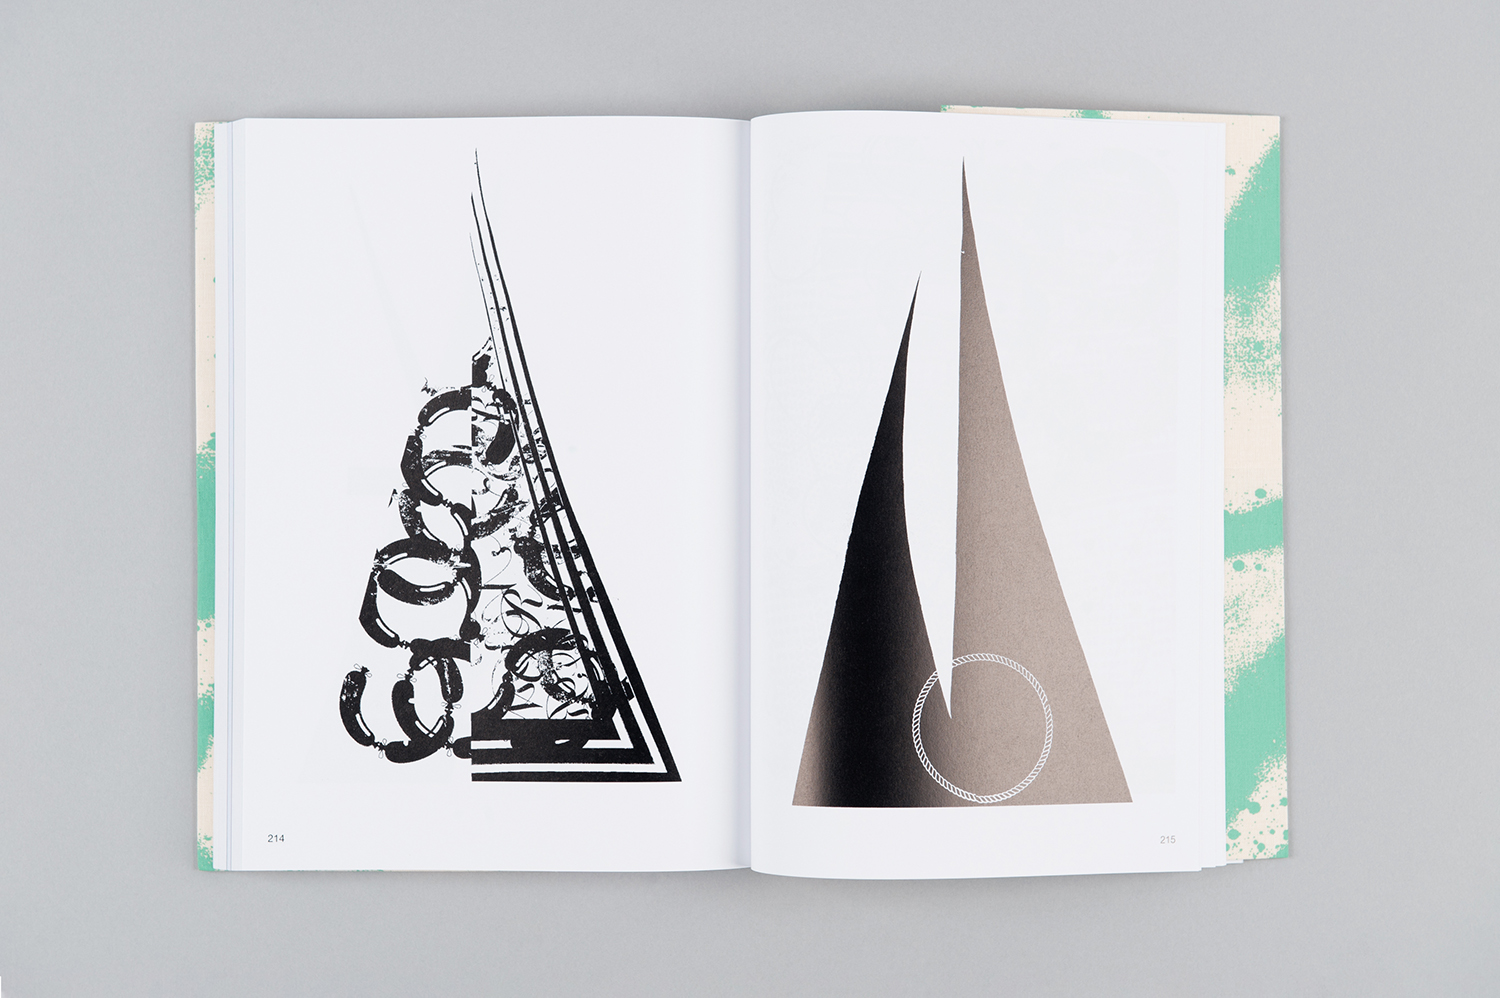 Book design by Zak Group for Norwegian artist Fredrik Værslev coinciding with the exhibition Fredrik Værslev As I Imagine Him